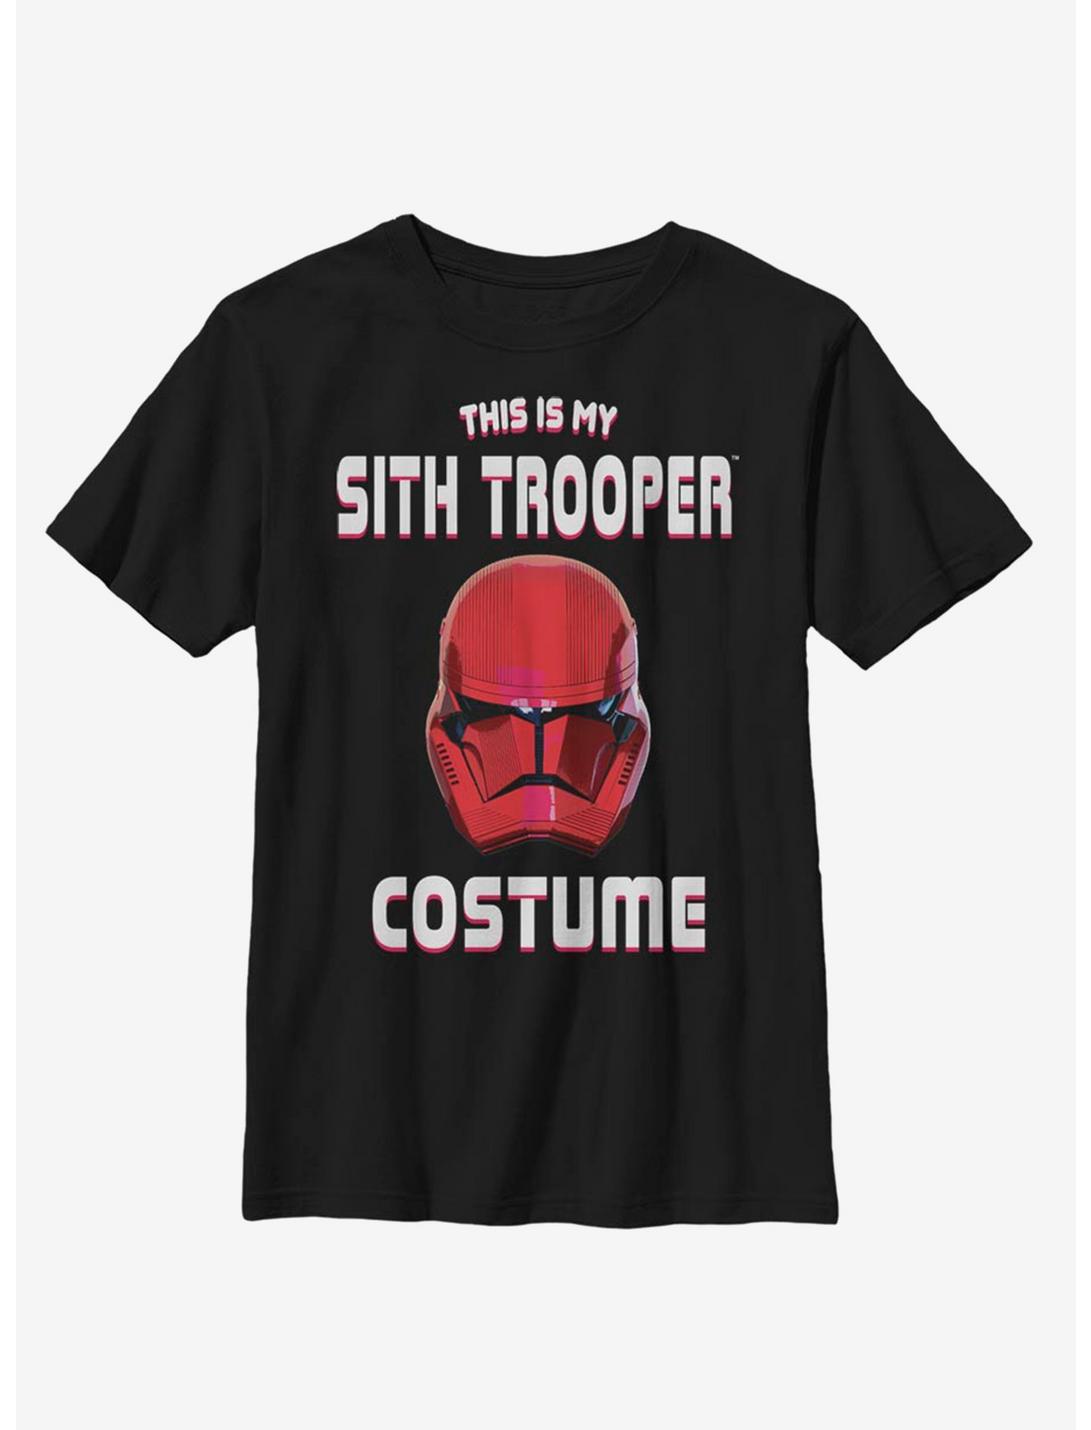 Star Wars Episode IX The Rise Of Skywalker Sith Trooper Costume Youth T-Shirt, BLACK, hi-res